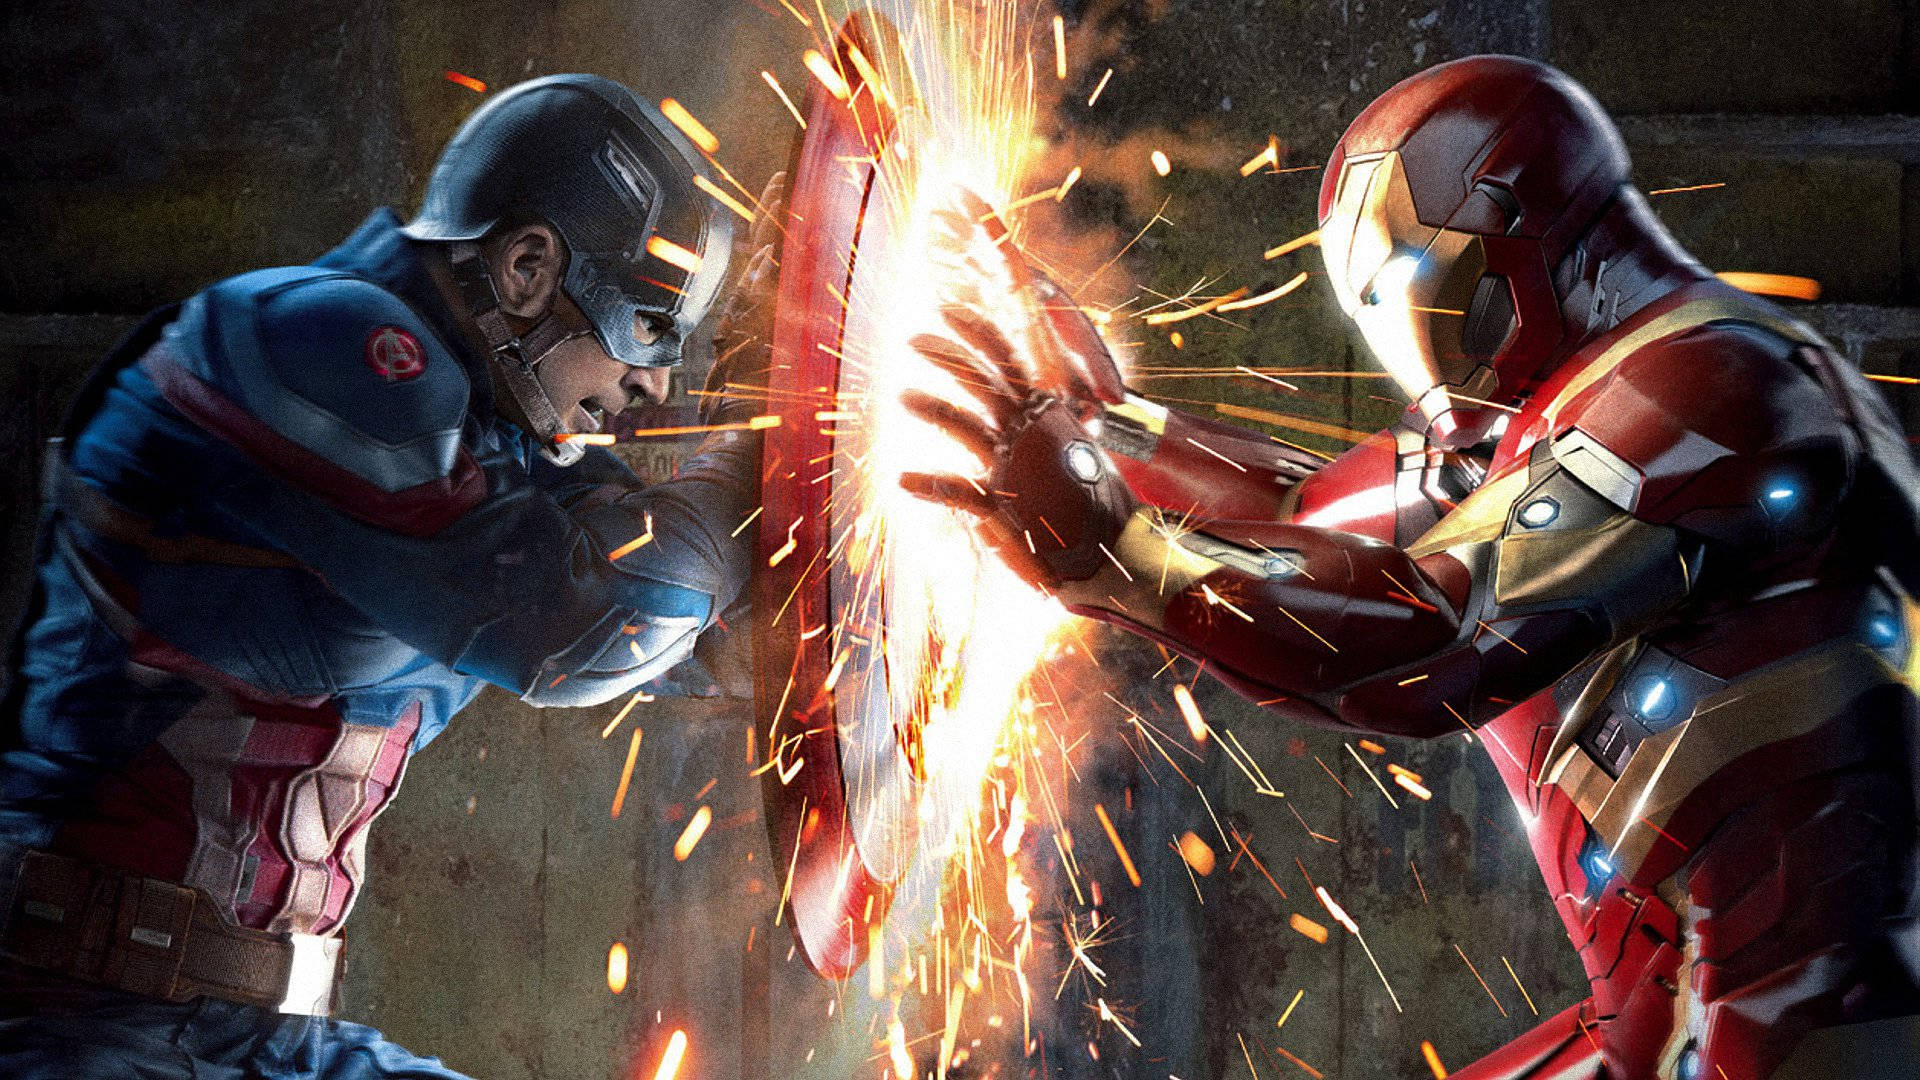 Ironman Attacker Captain America Civil War - Iron Man Angriper Captain America Civil War. Wallpaper